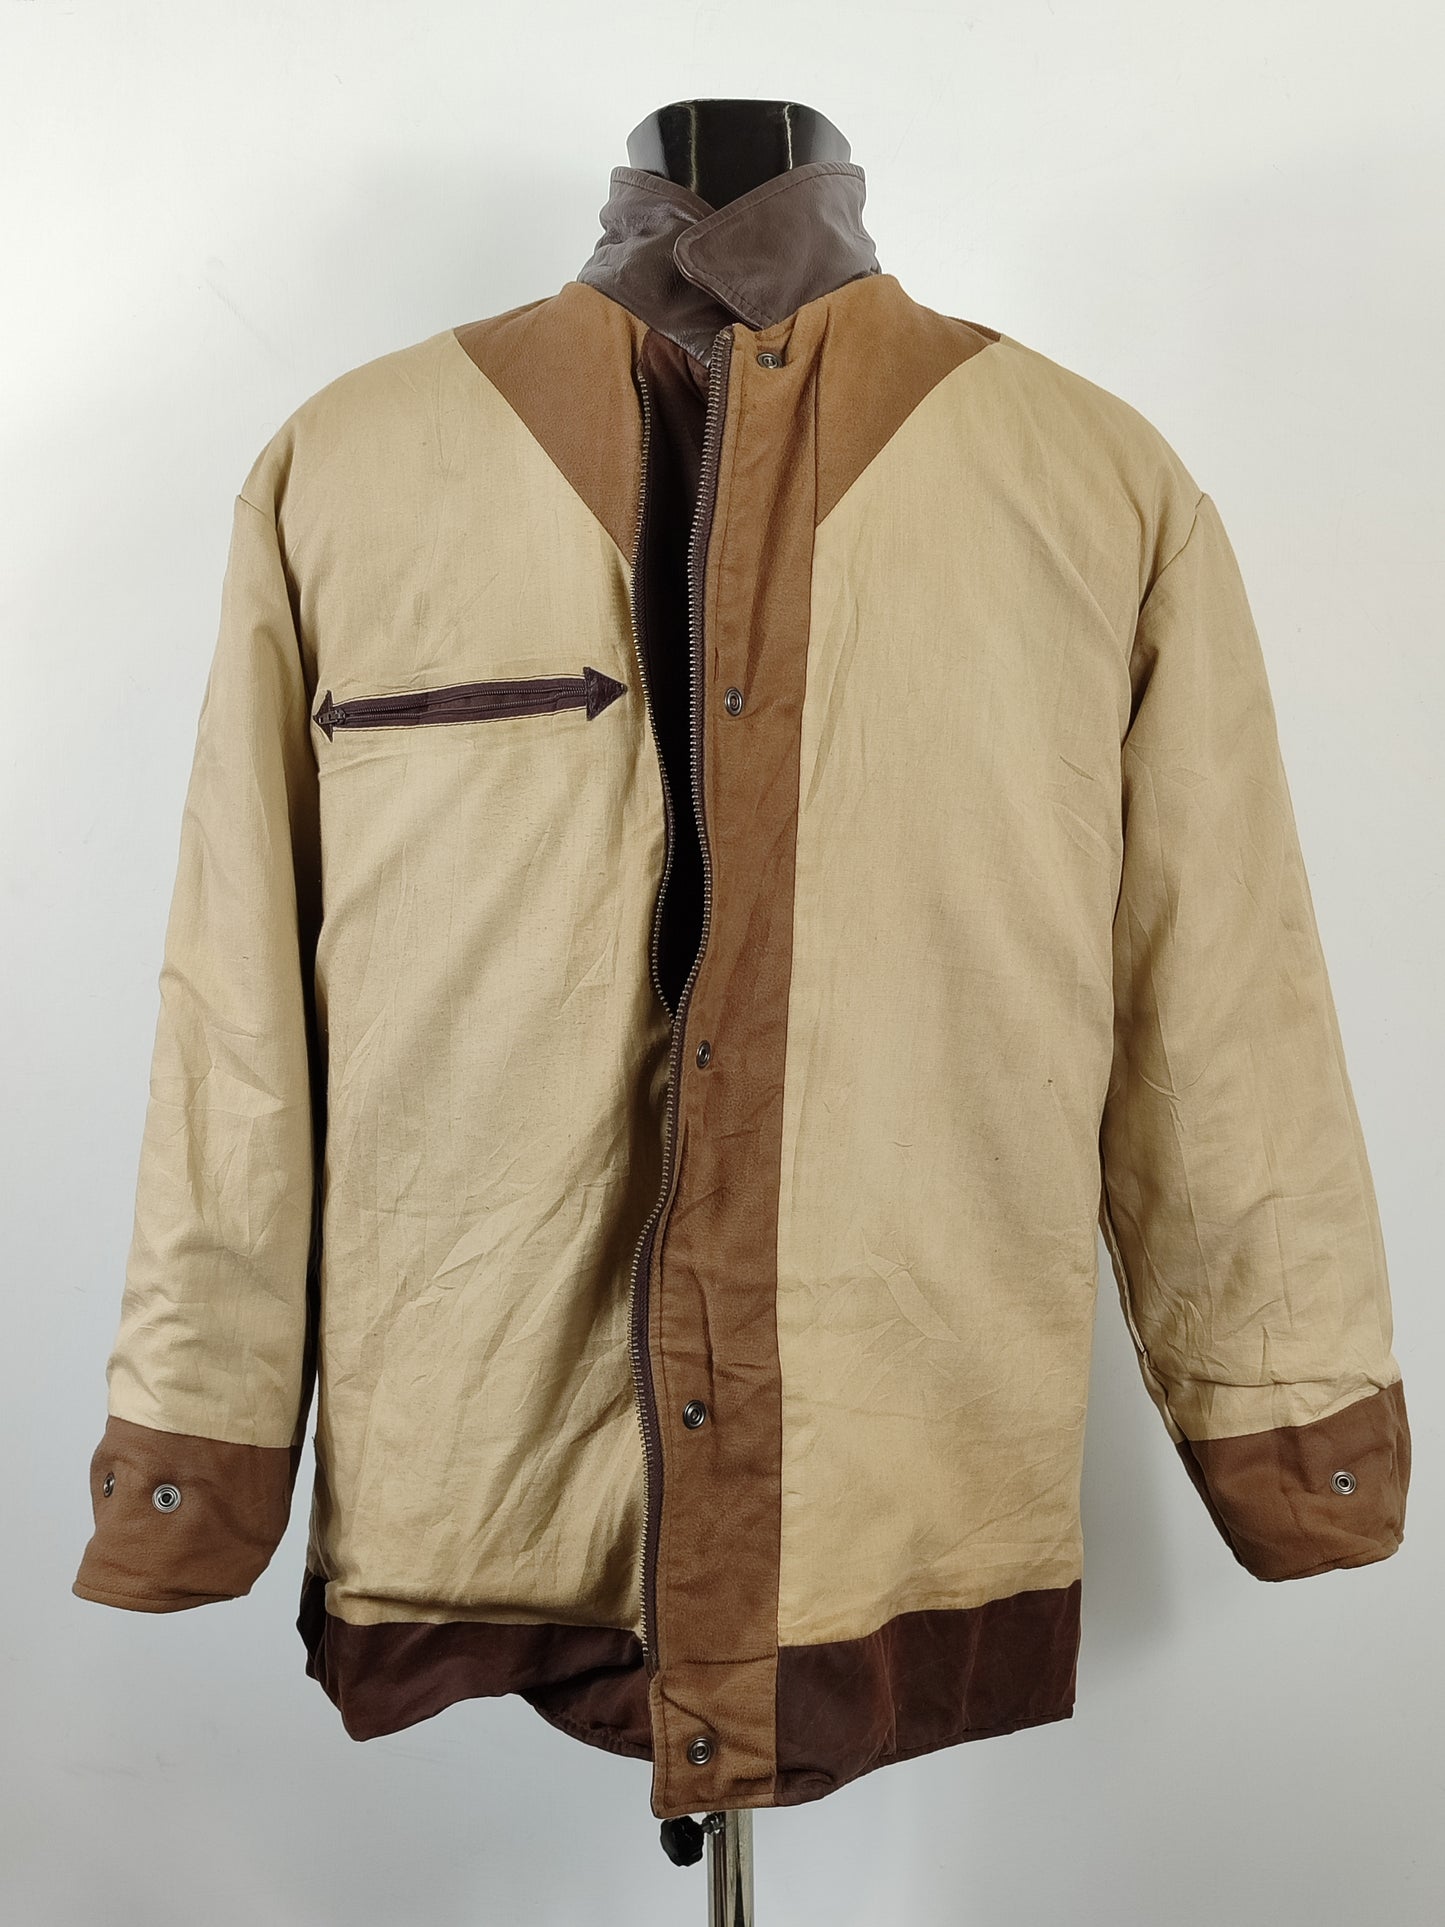 Barbour Giacca Uomo Bushman Marrone Large- Man Wax Brown Bushman Jacket Size Large